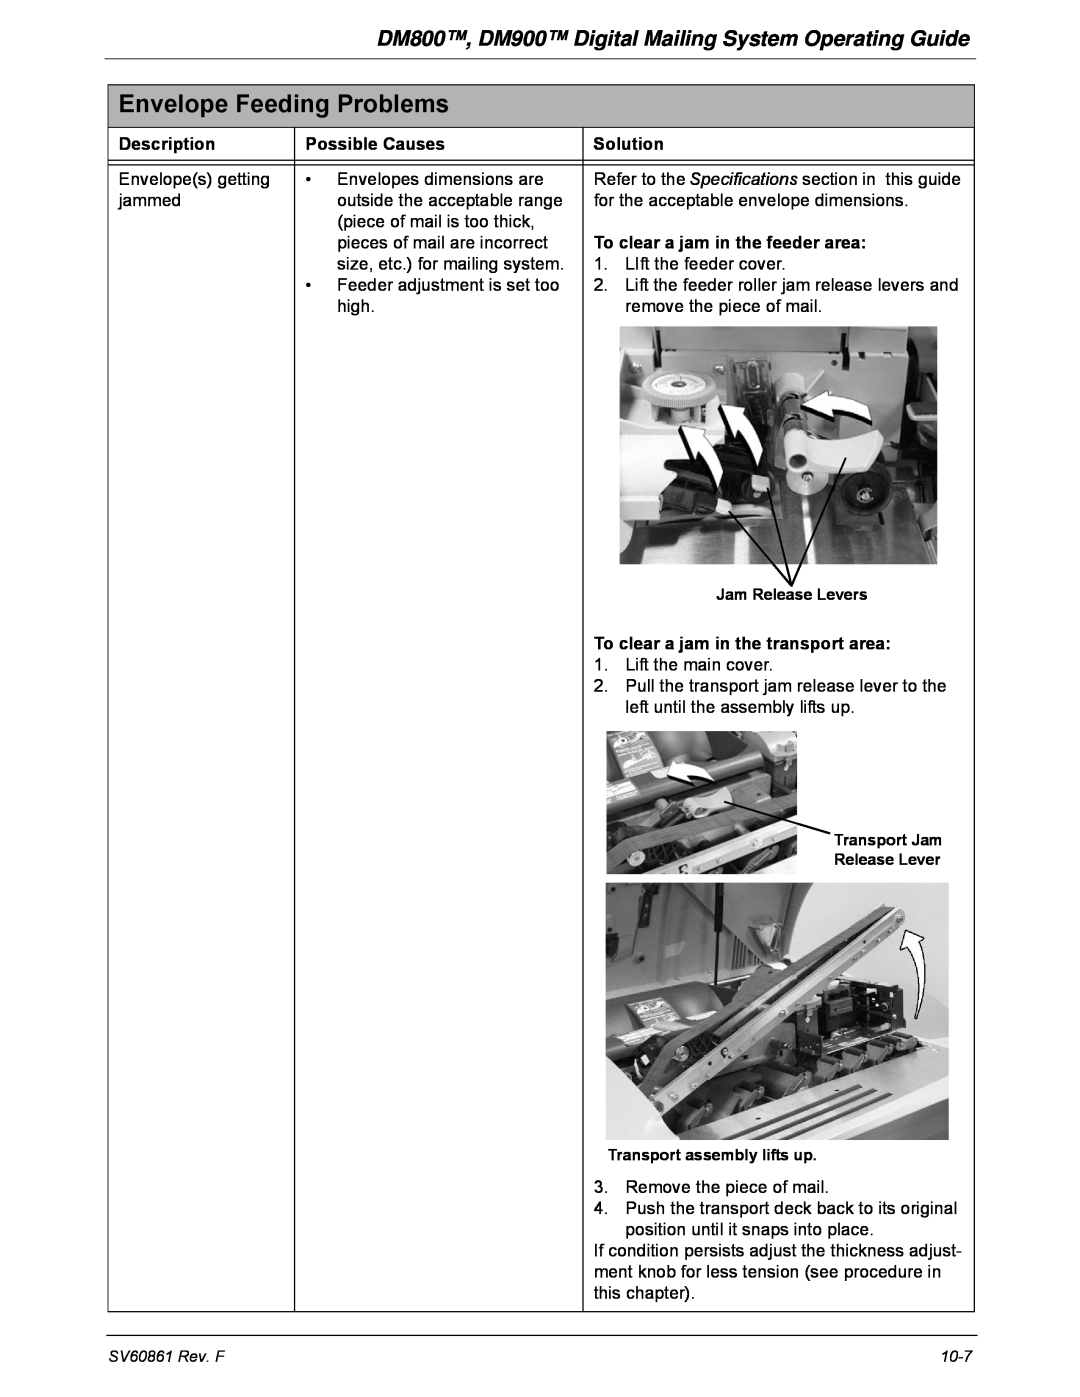 Pitney Bowes Envelope Feeding Problems, DM800, DM900 Digital Mailing System Operating Guide, Description, Solution 